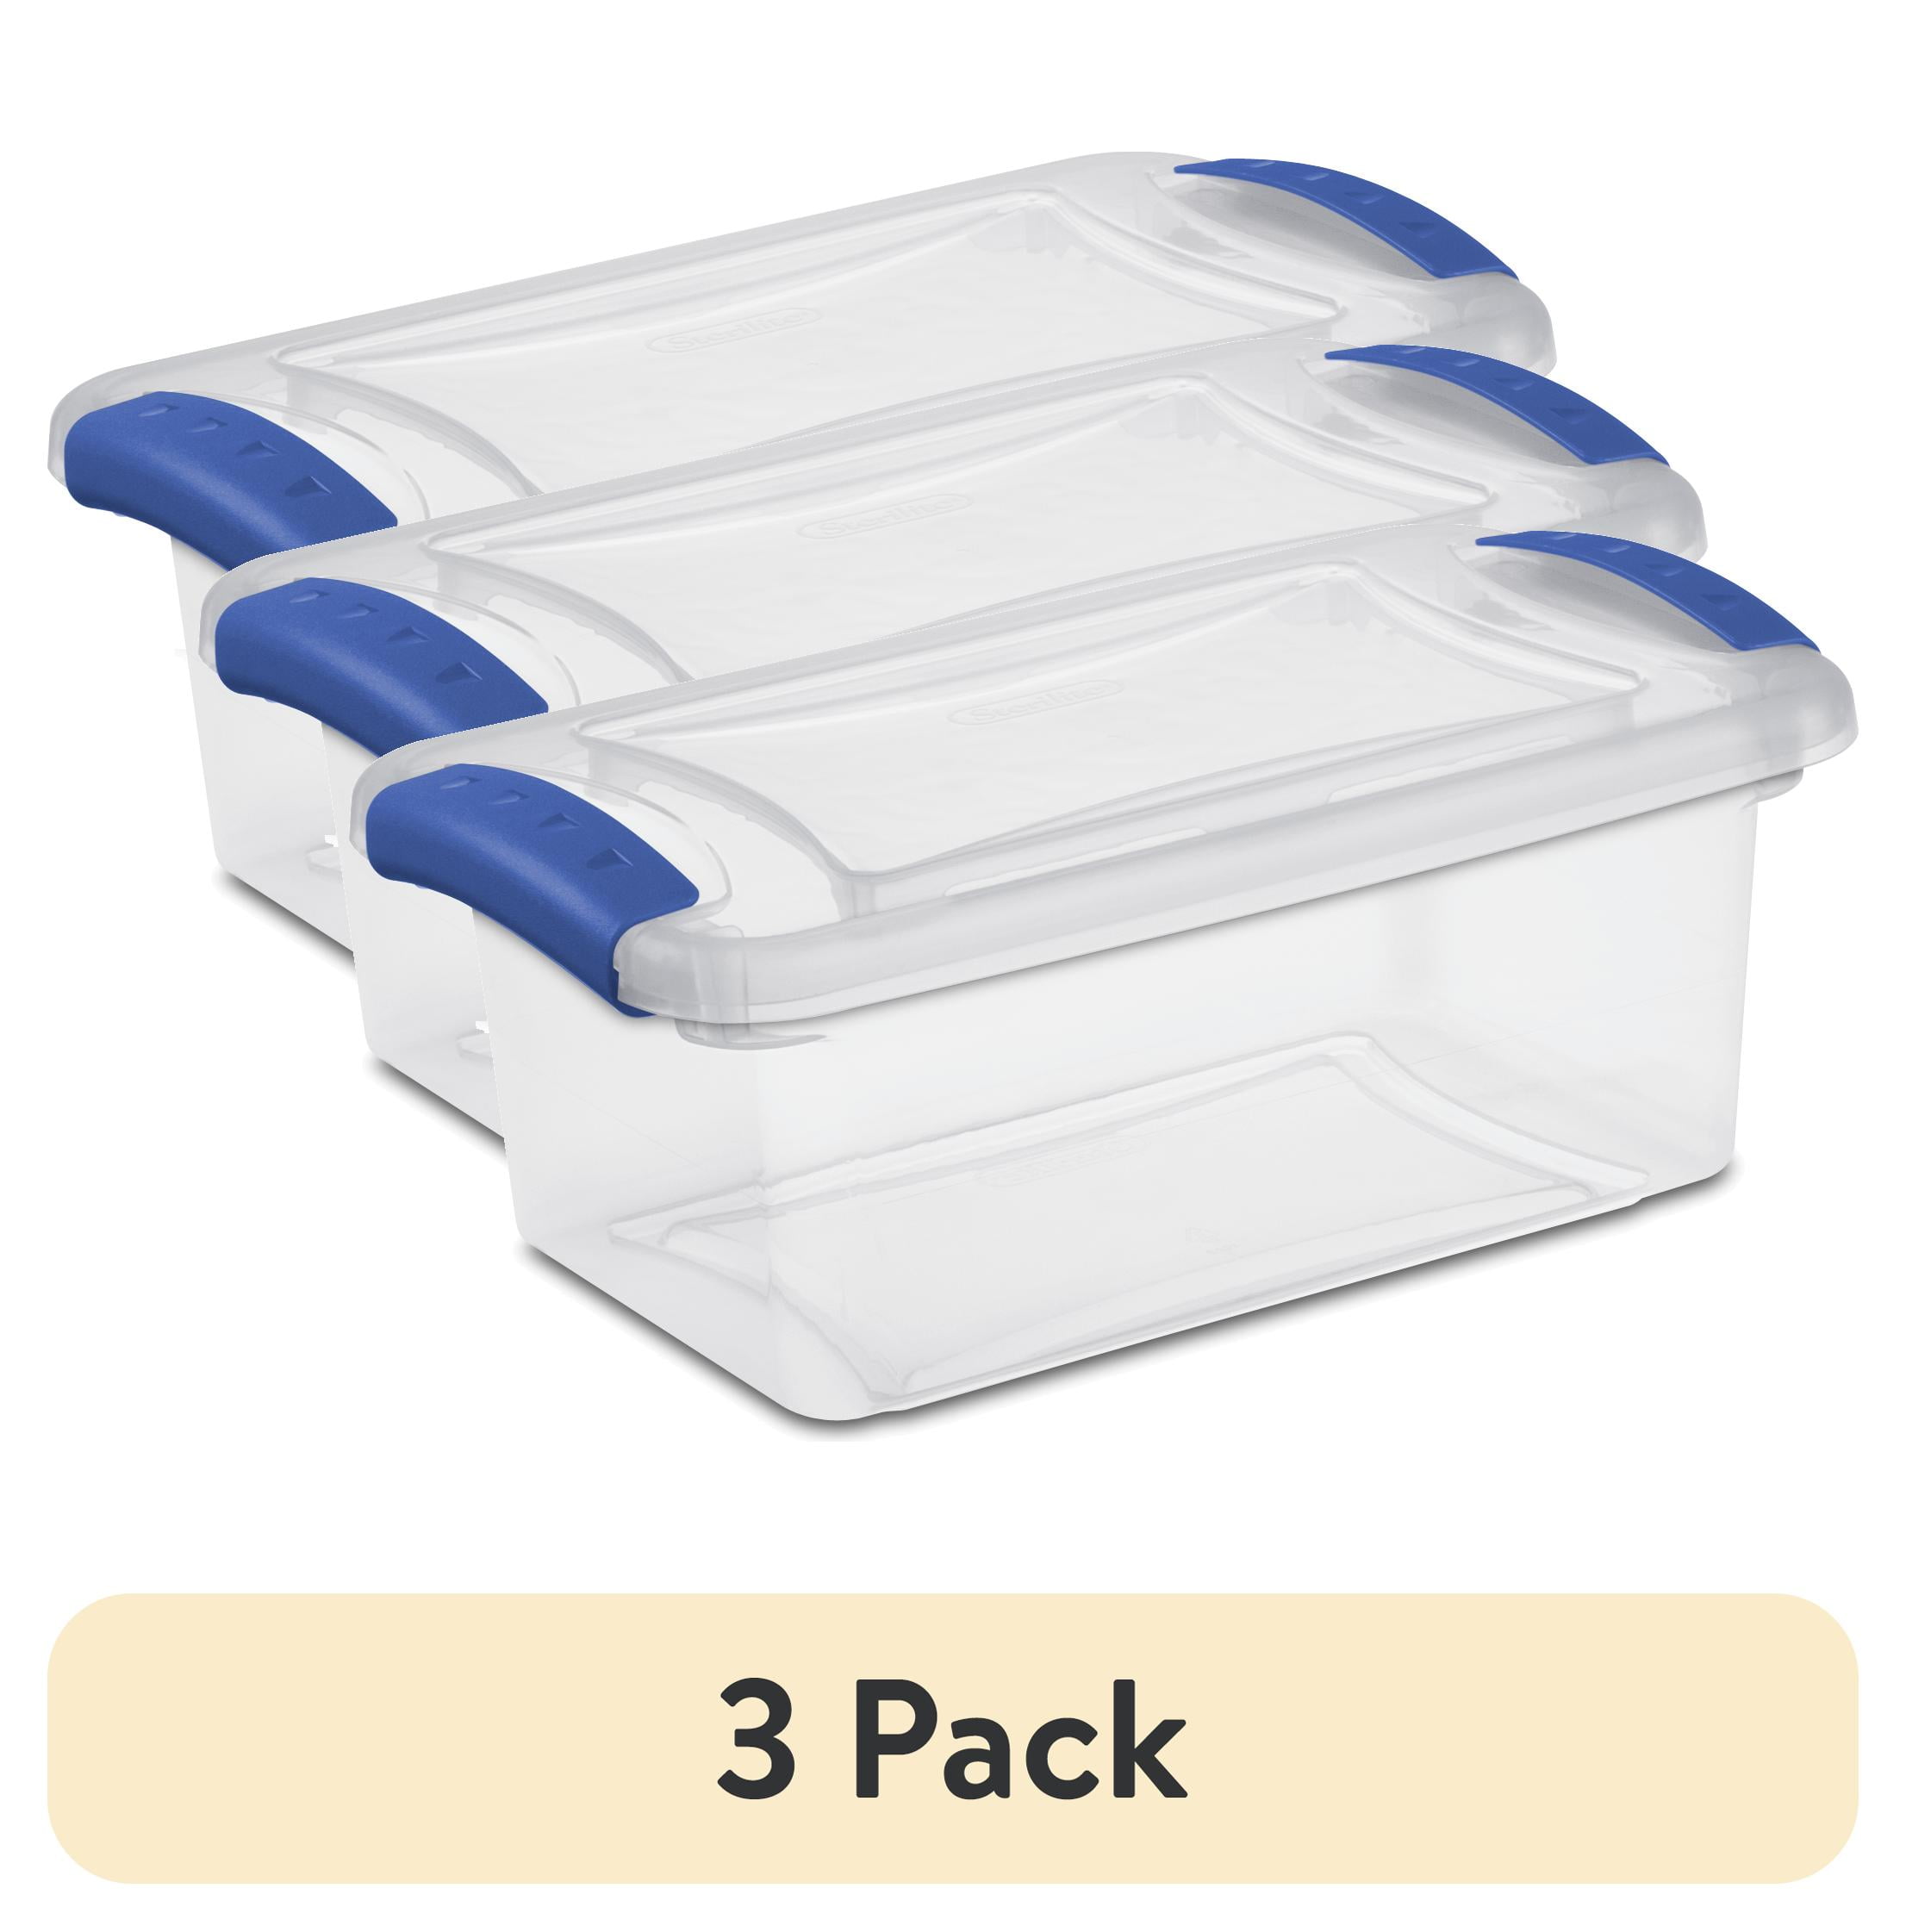 Sterilite Clear Storage Box 7x4.5 1pc – The Cuisinet